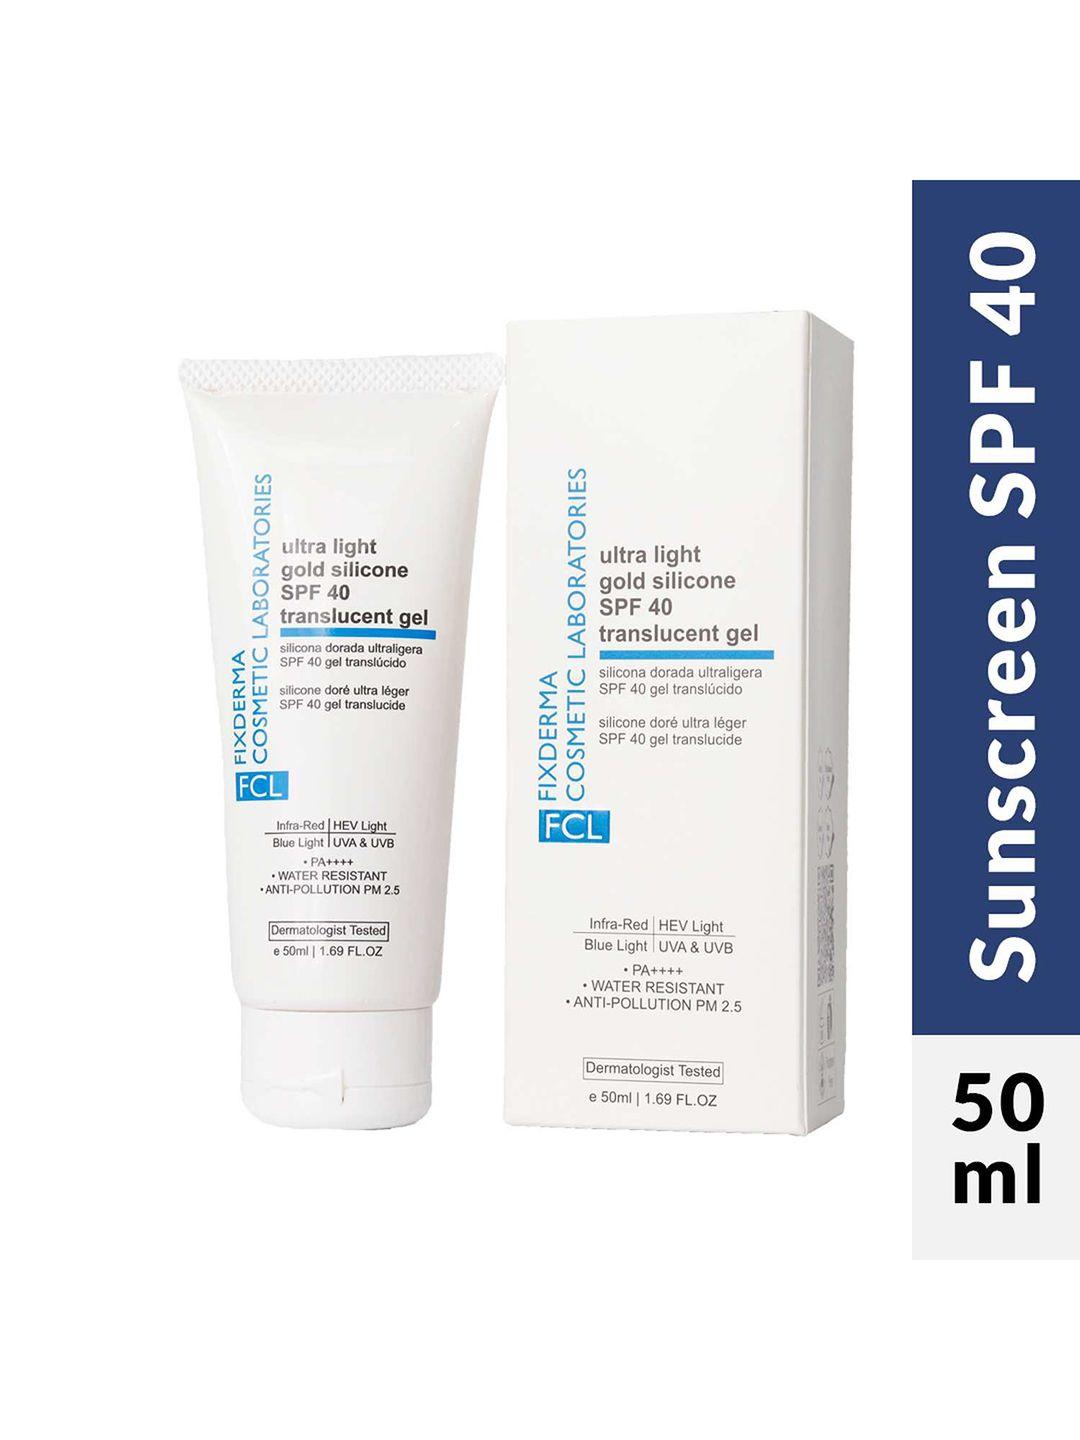 fixderma cosmetic laboratories ultra light spf 40 translucent gel - 50ml